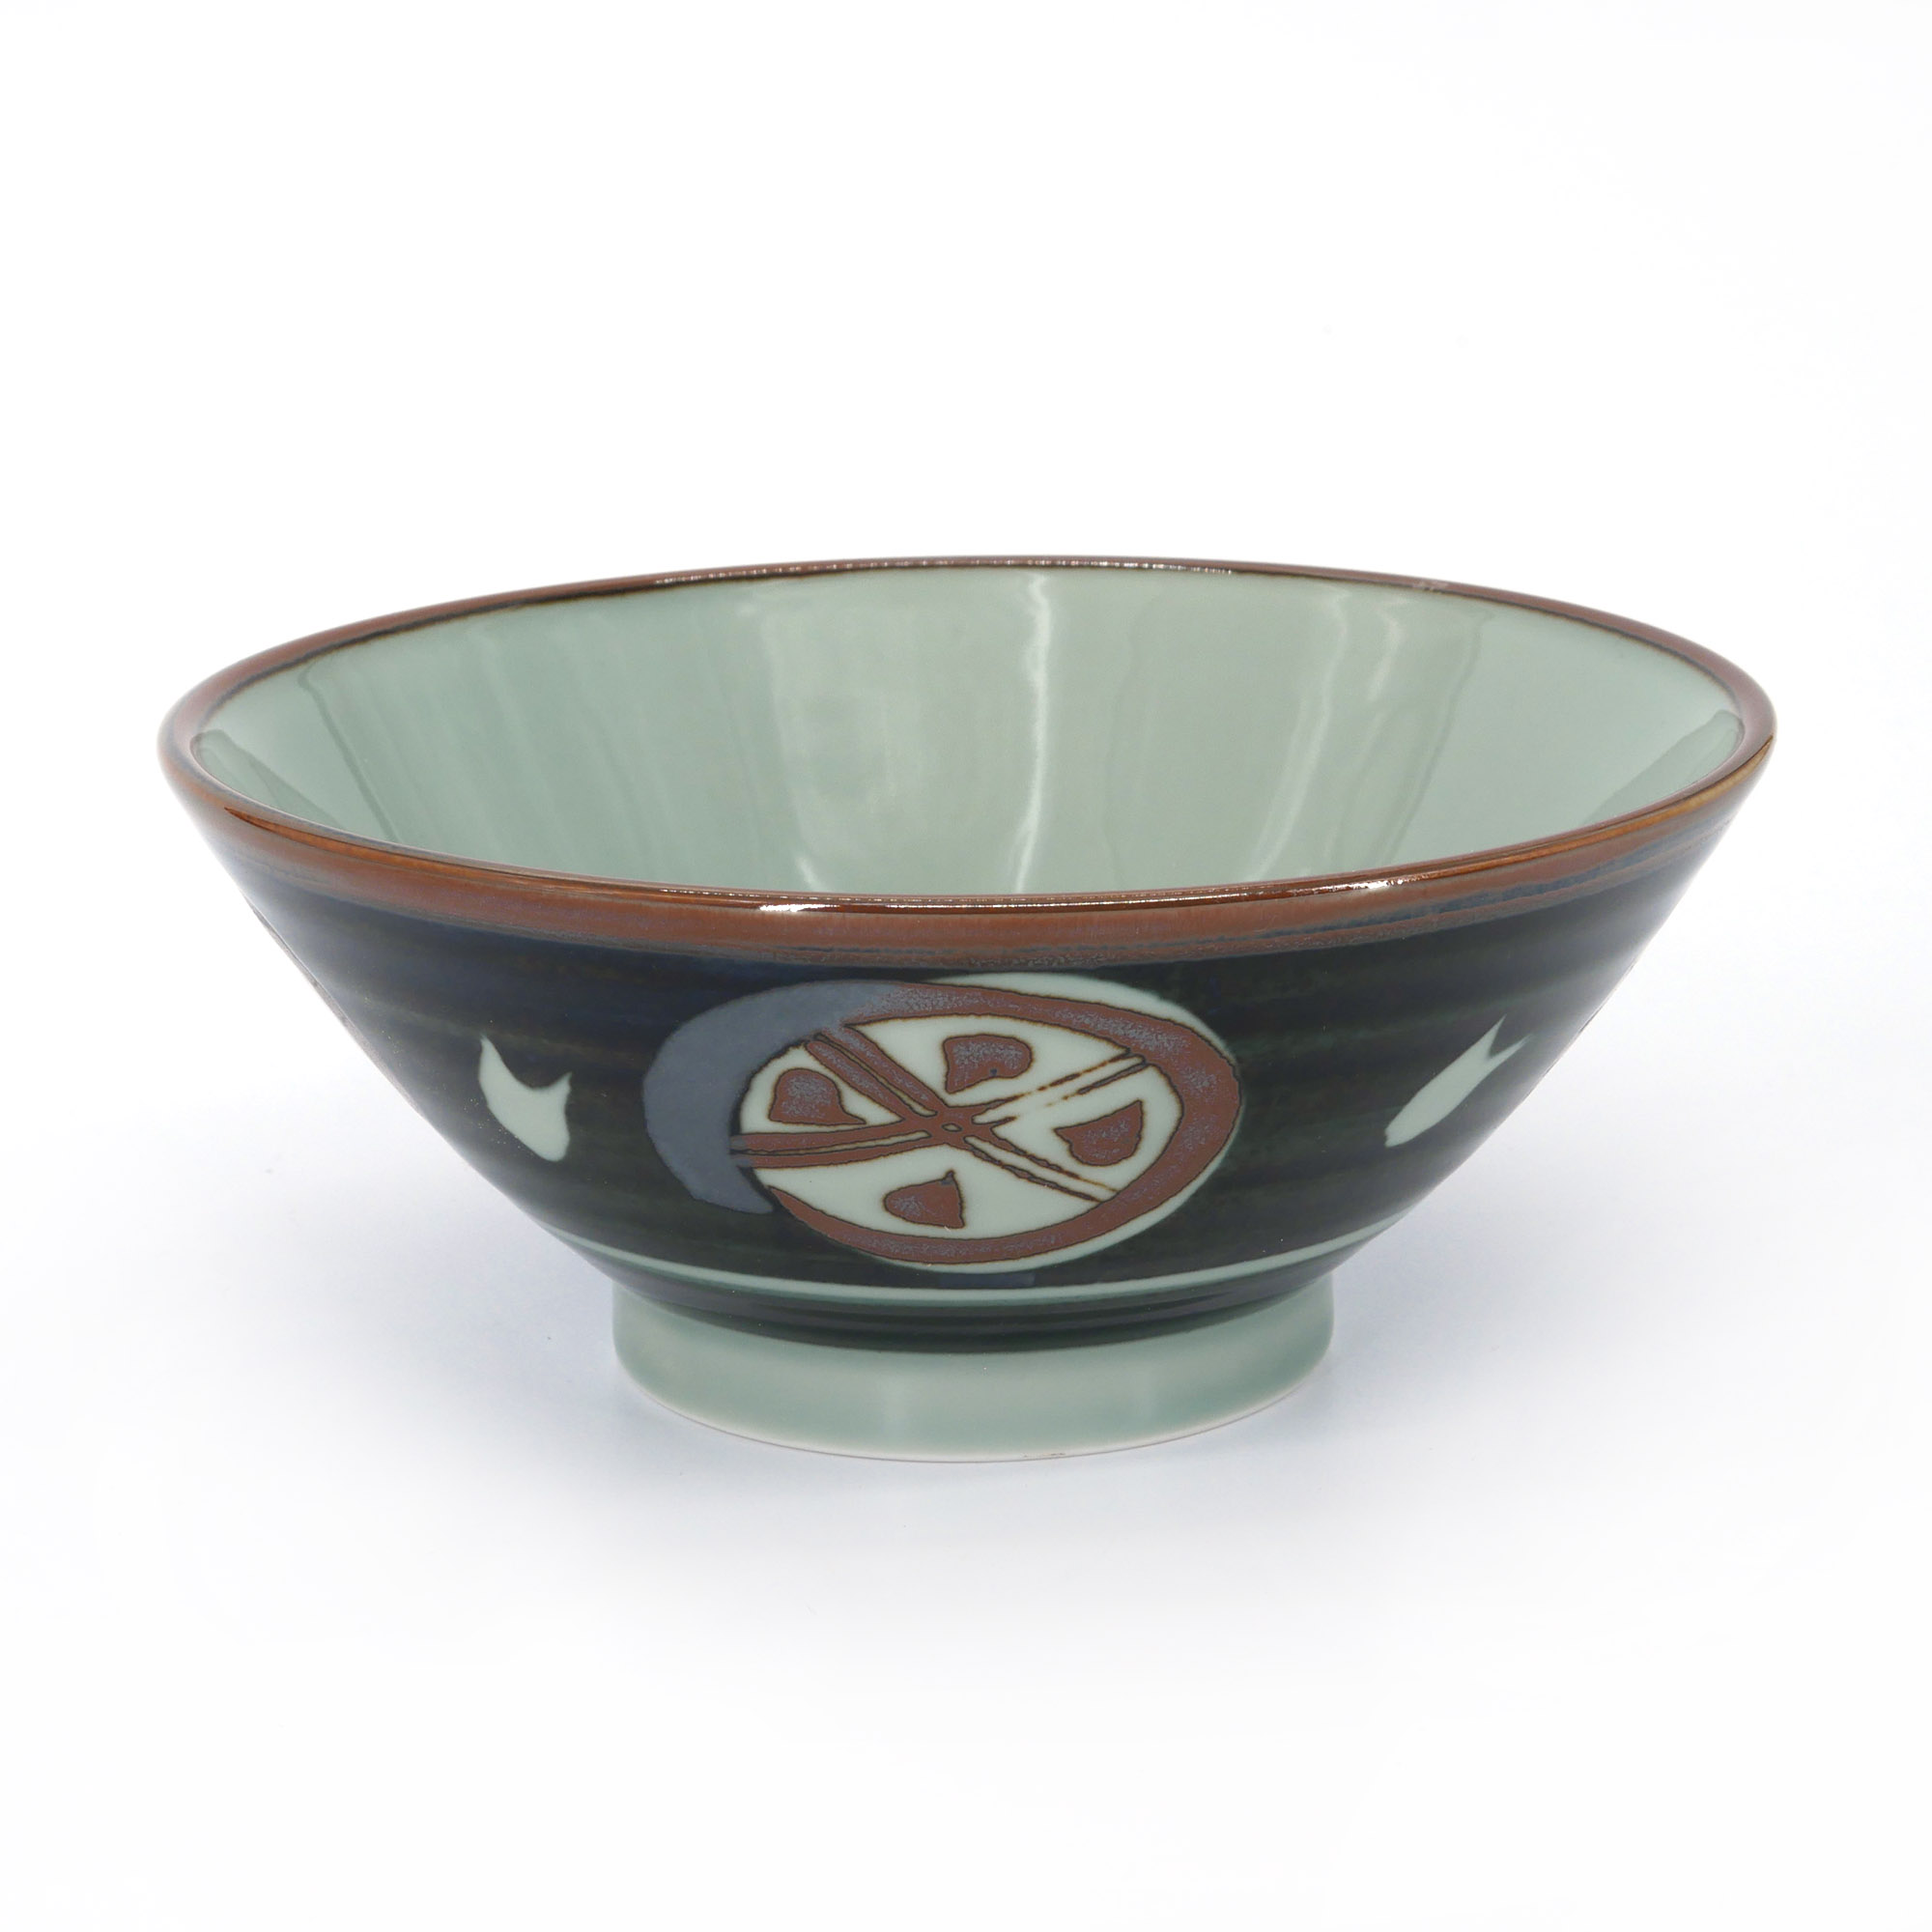 Piccola ciotola per ramen in ceramica giapponese, blu-verde scuro